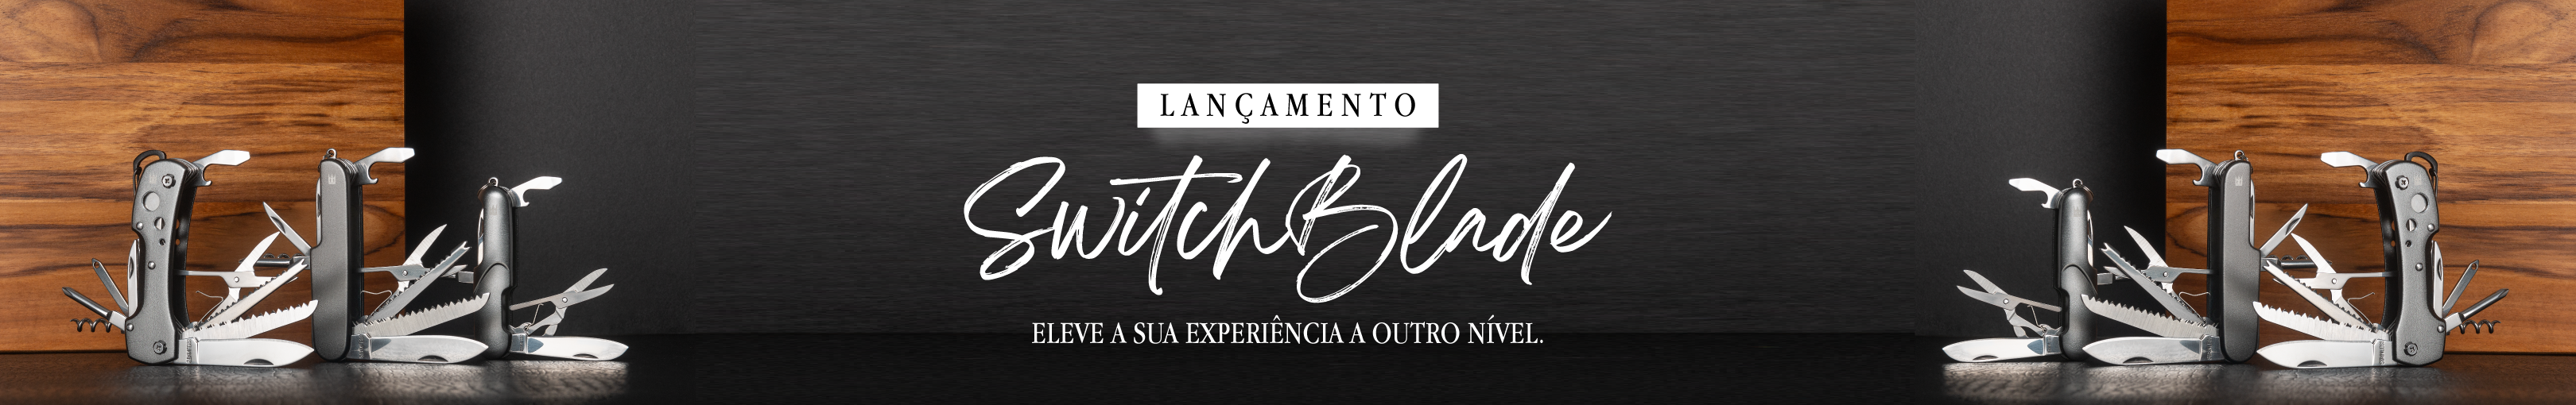 Banner Vitrine | Lancamento | Switchblade